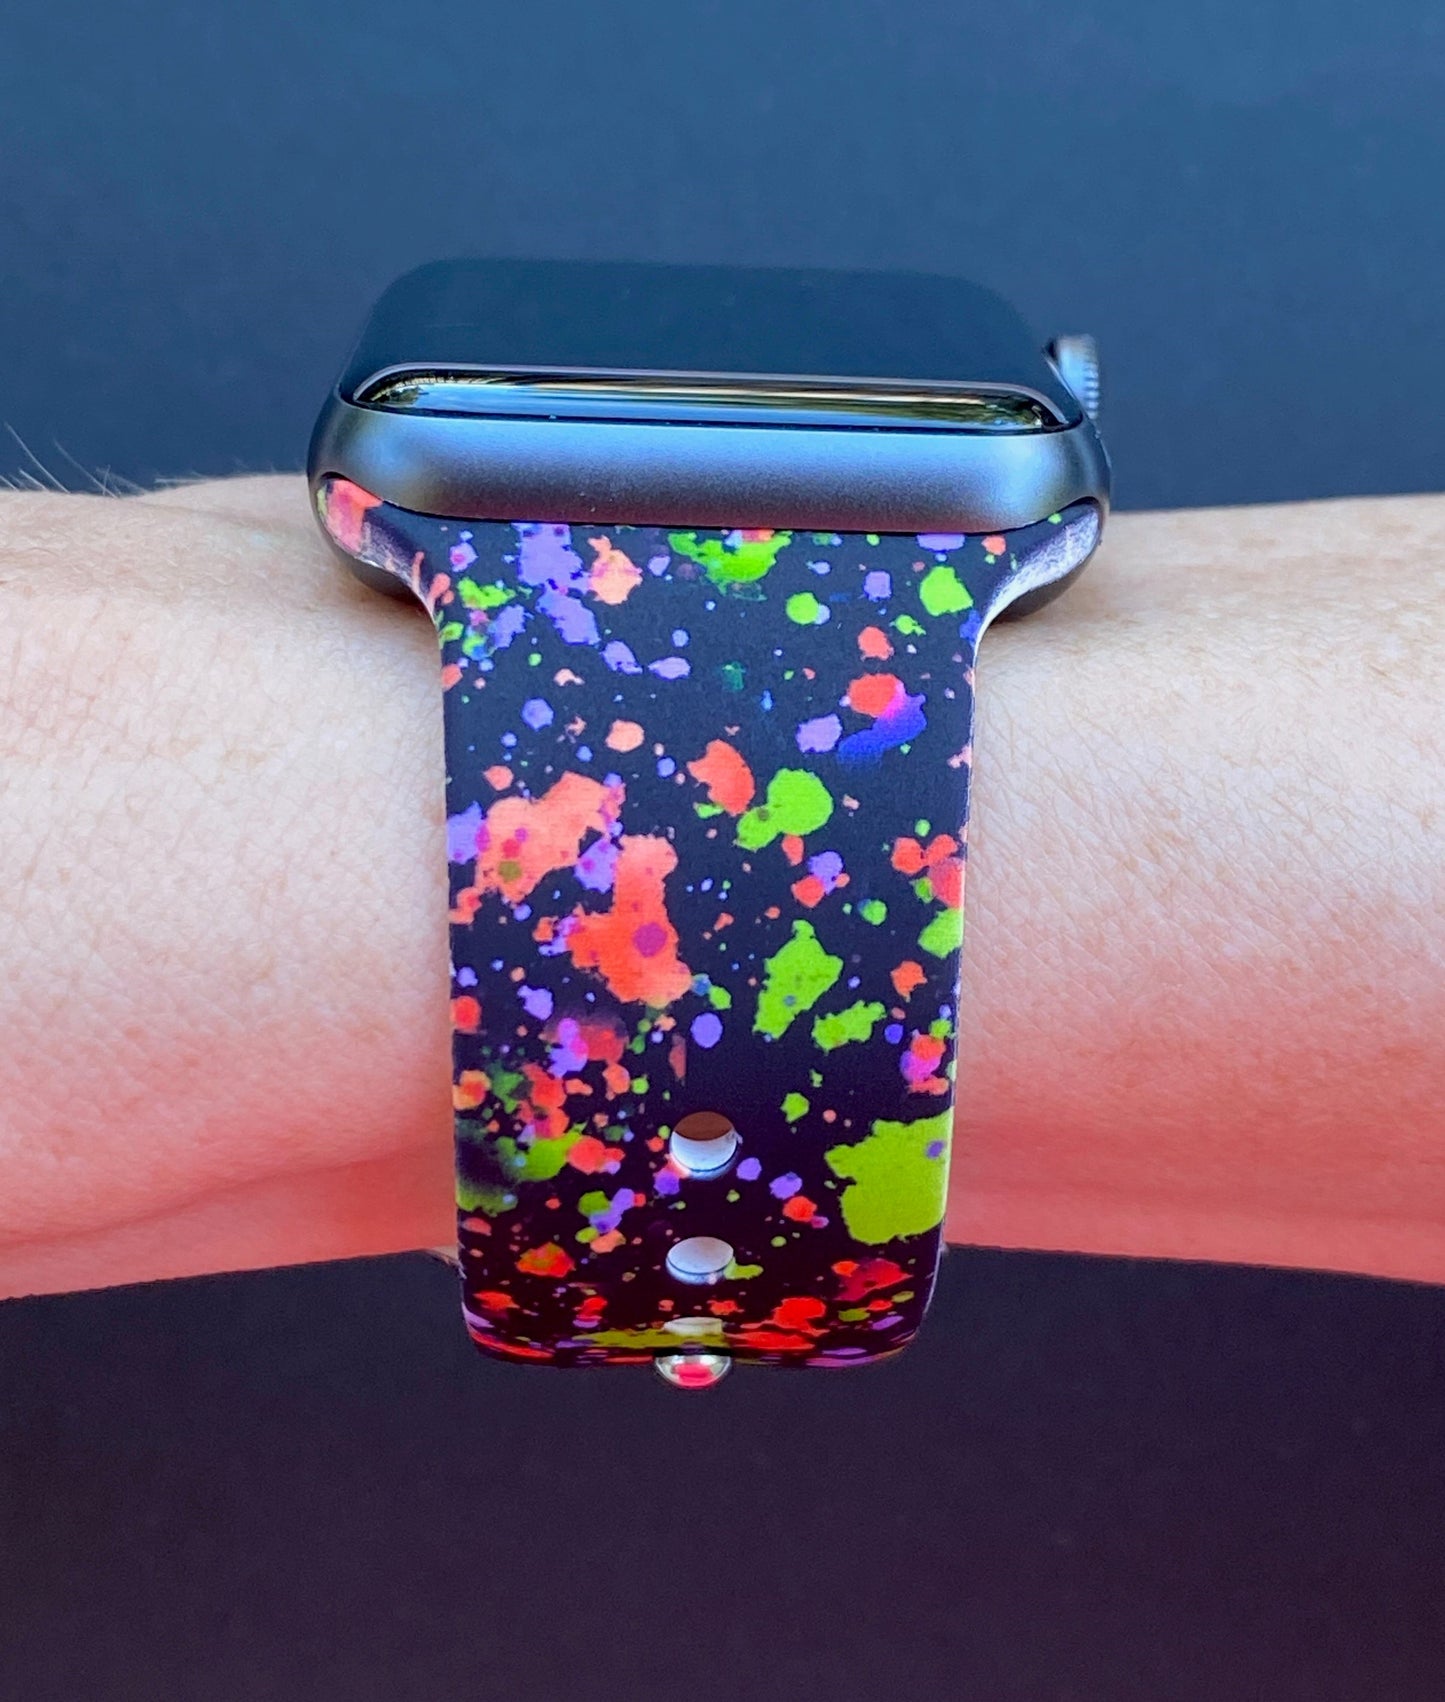 Halloween Neon Splatter Apple Watch Band